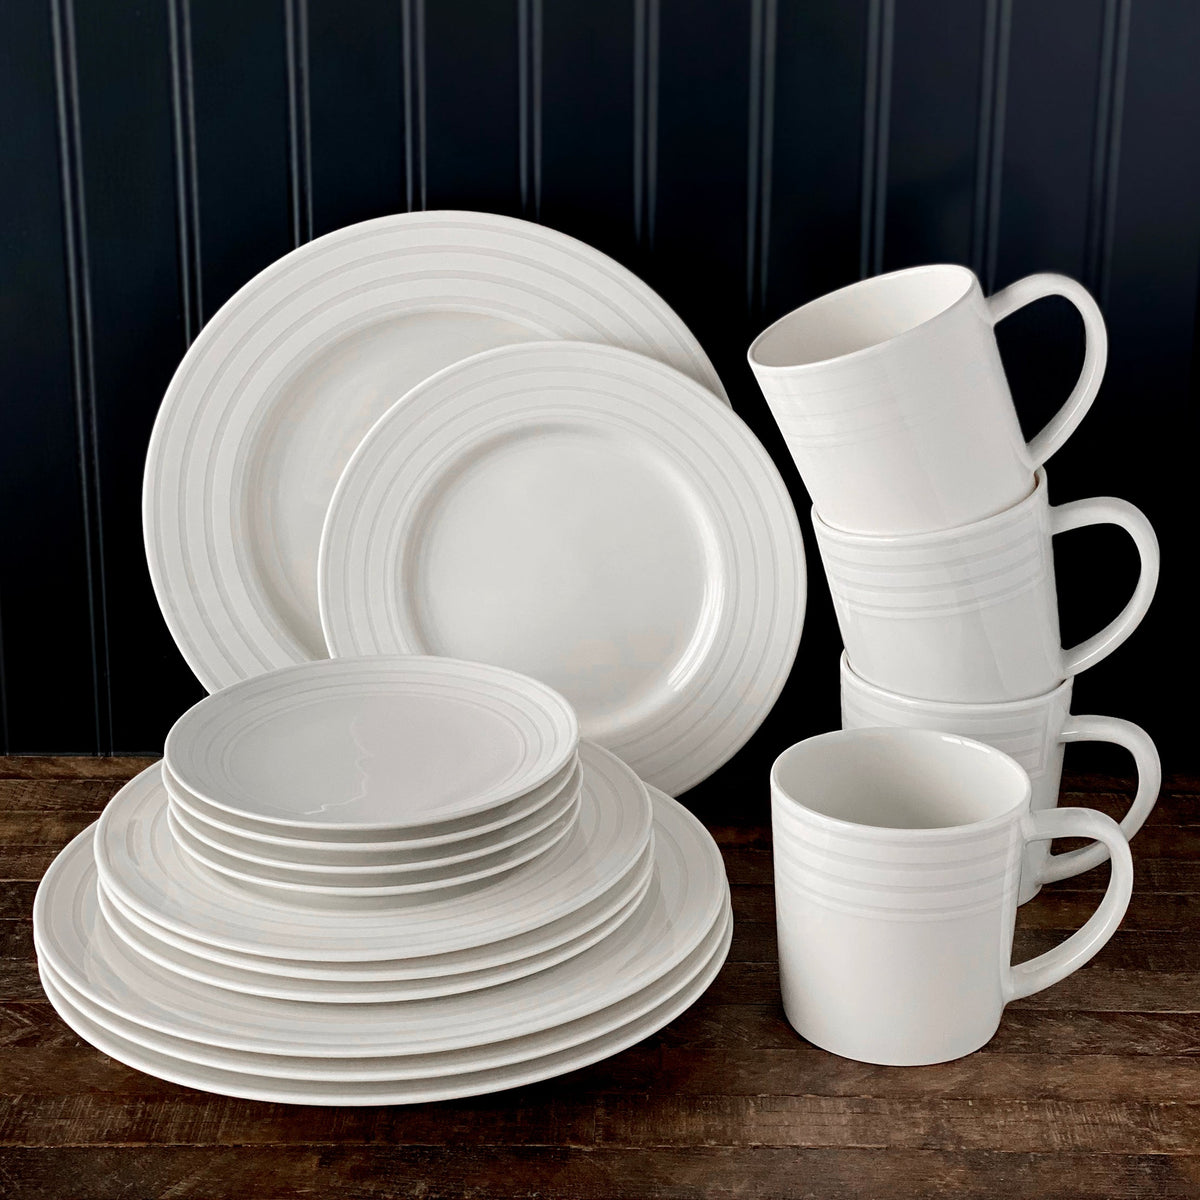 Cambridge Stripe Dinnerware Collection from Caskata